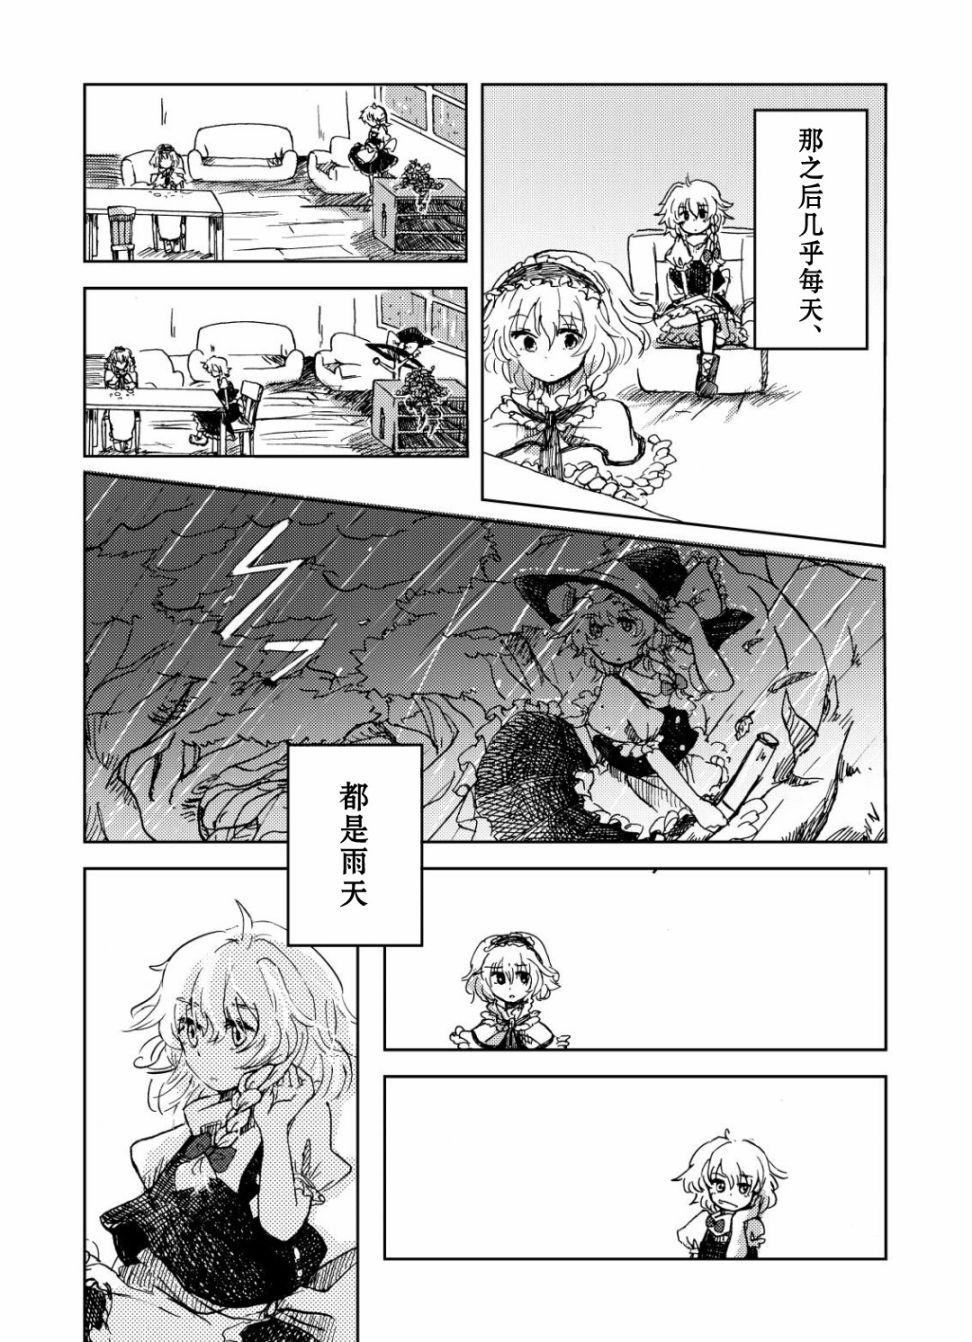 Rainy-rainy Little Girl - 短篇(1/7) - 3